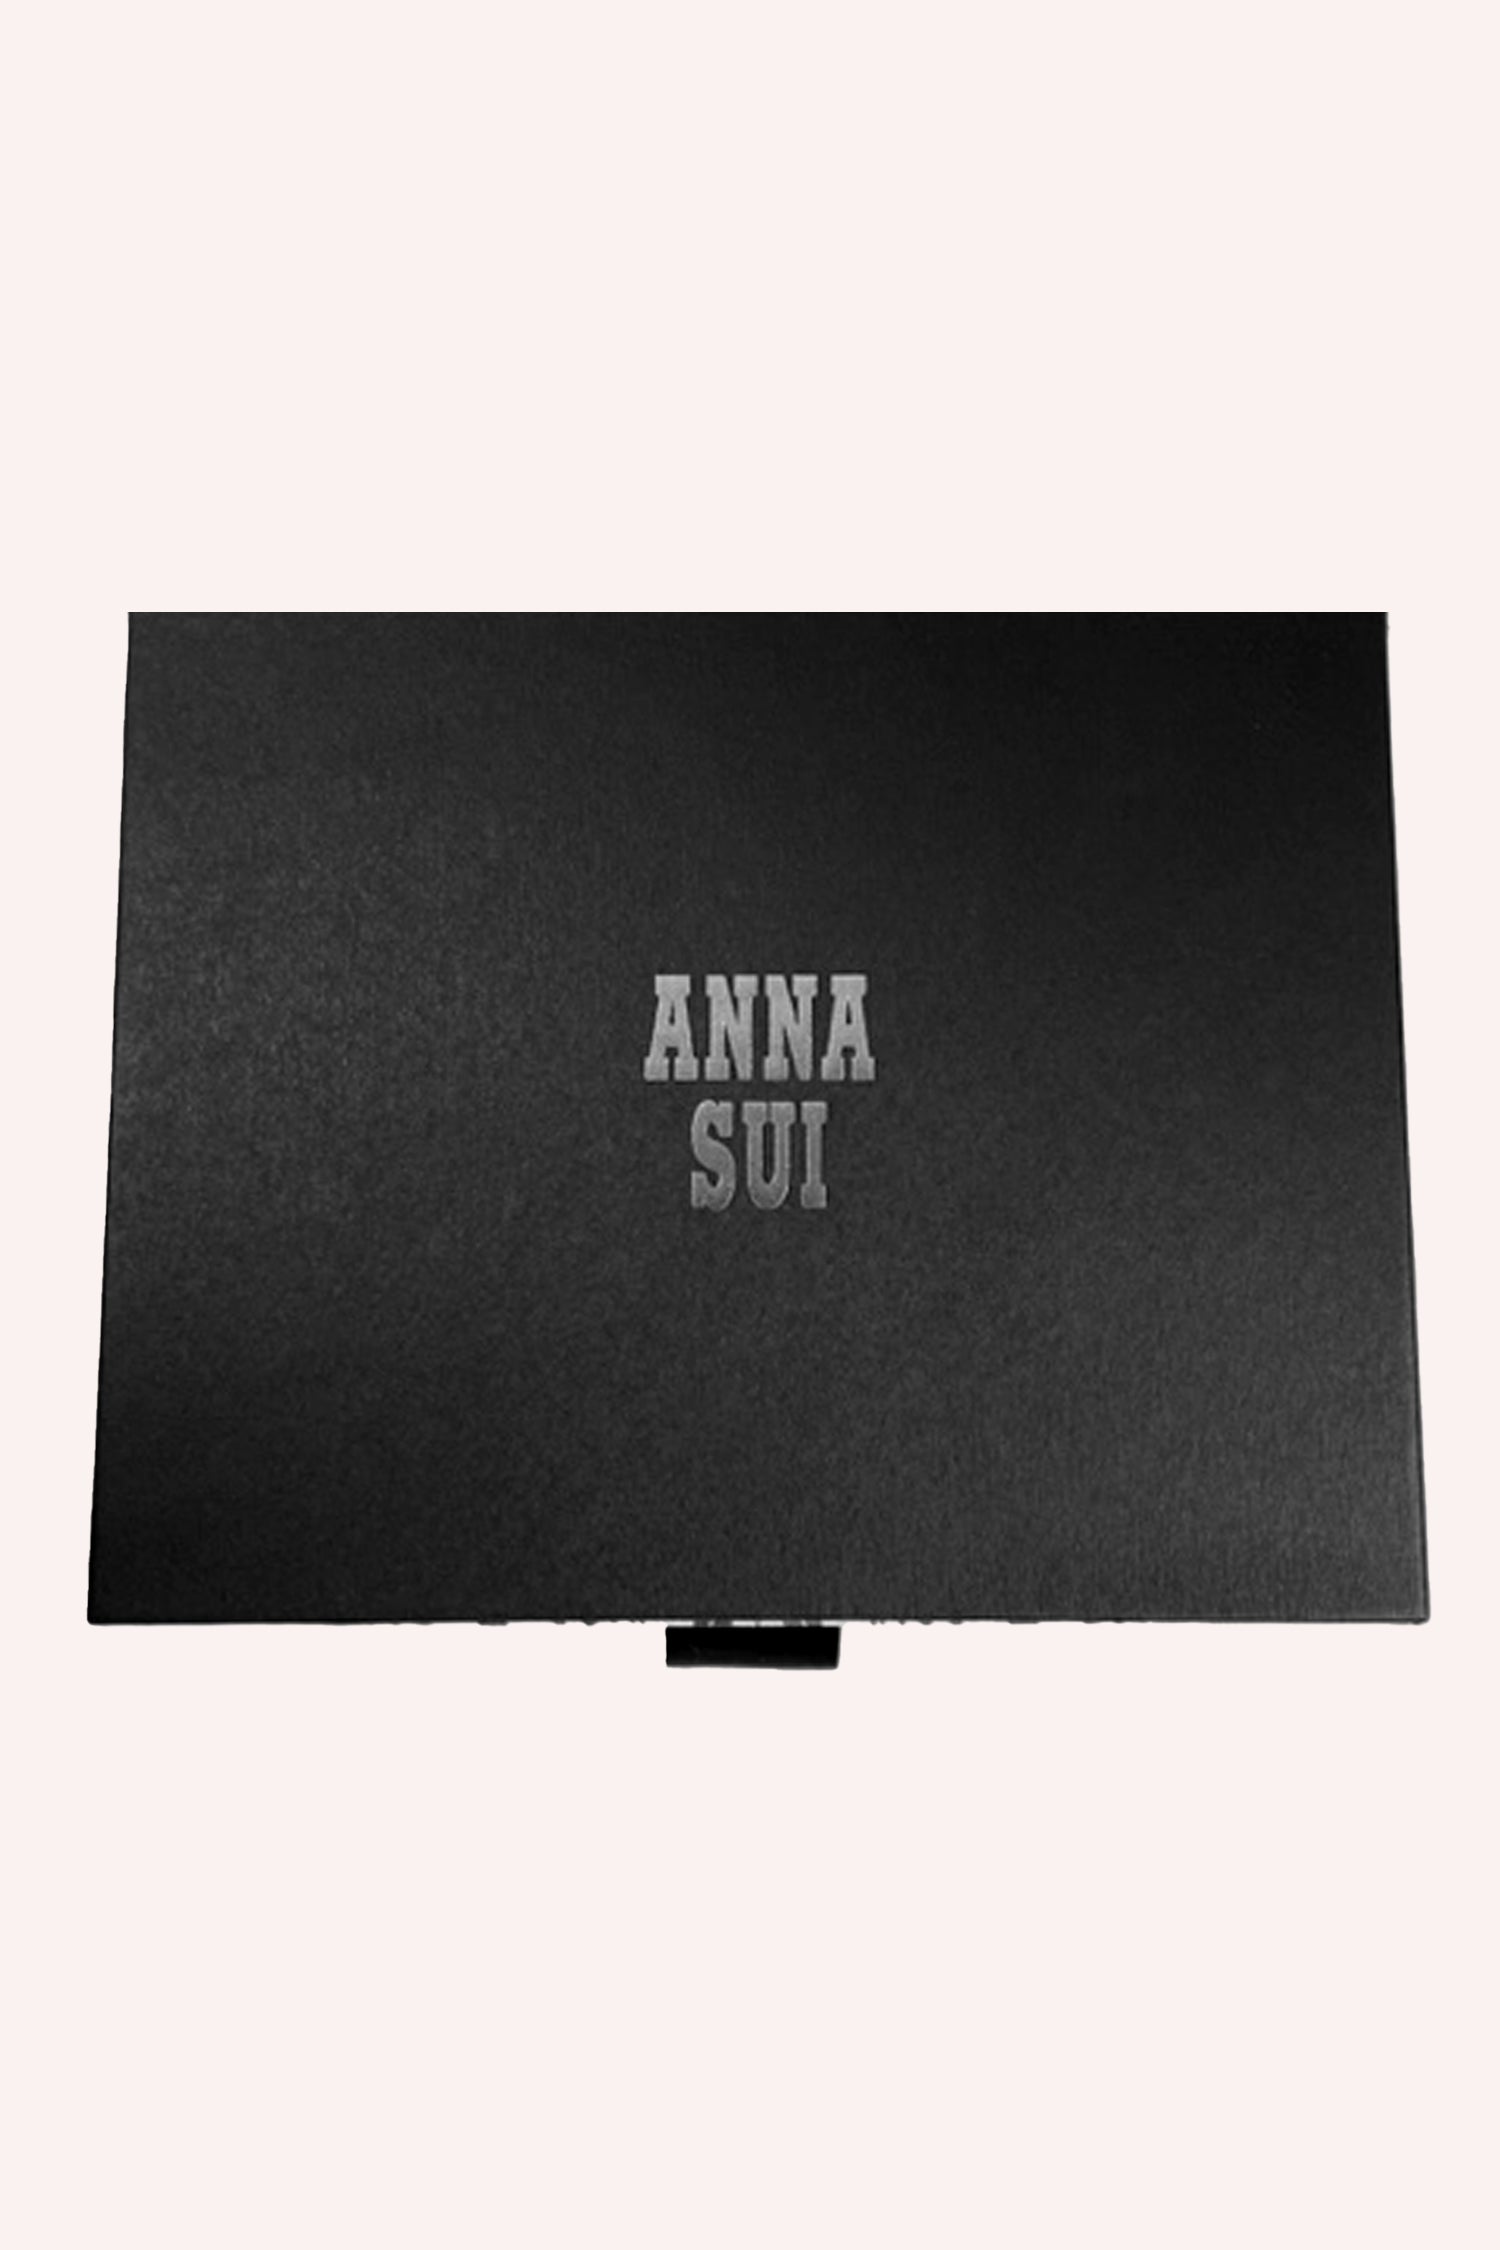 Limited Edition: Fukubukuro Mystery Box - Anna Sui